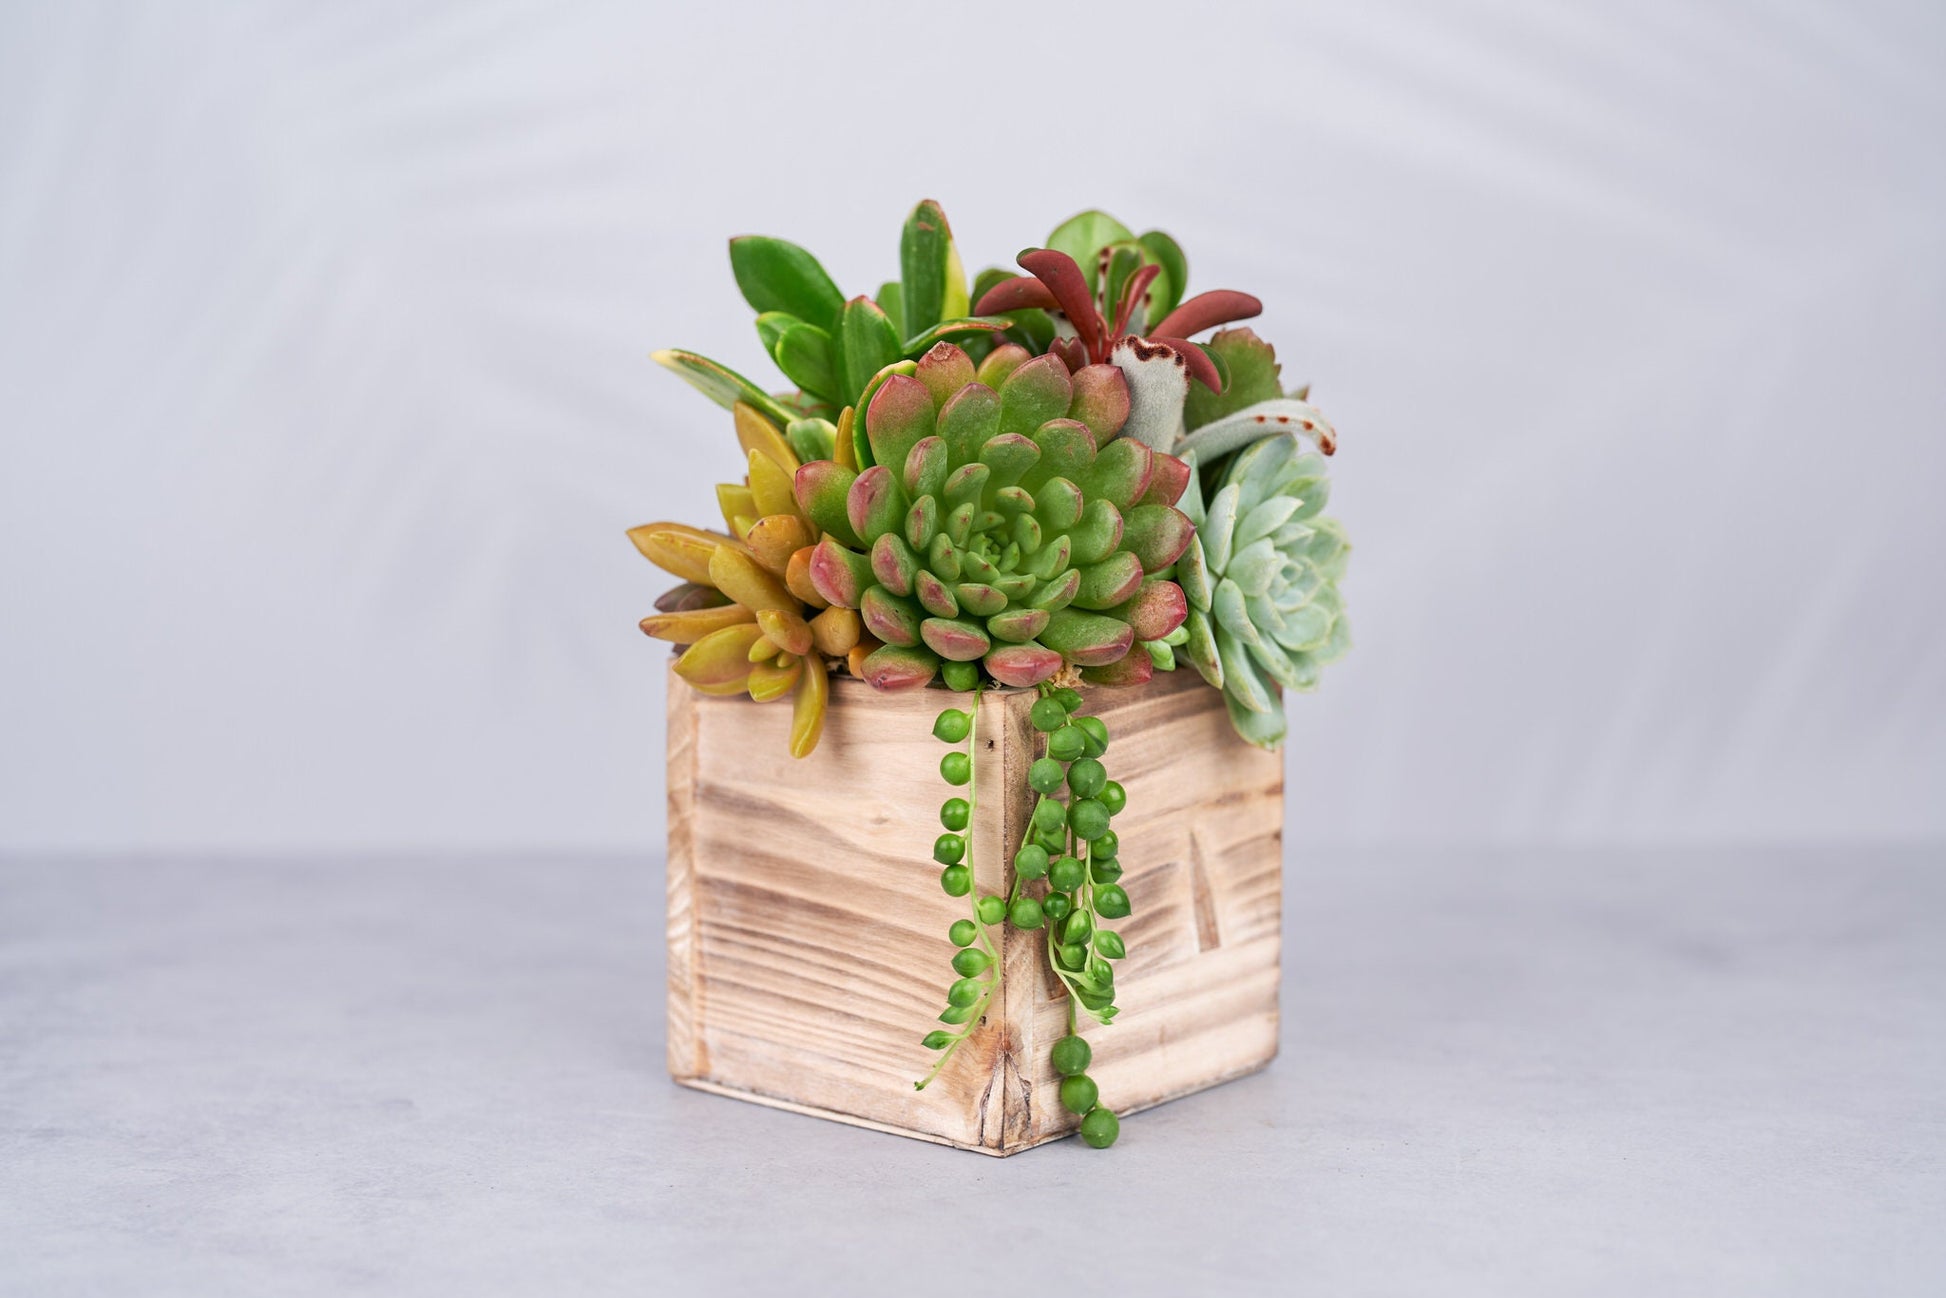 Small Wood Rustic Succulent Arrangement Planter: Living Succulent Gift or Centerpiece for Weddings & Events